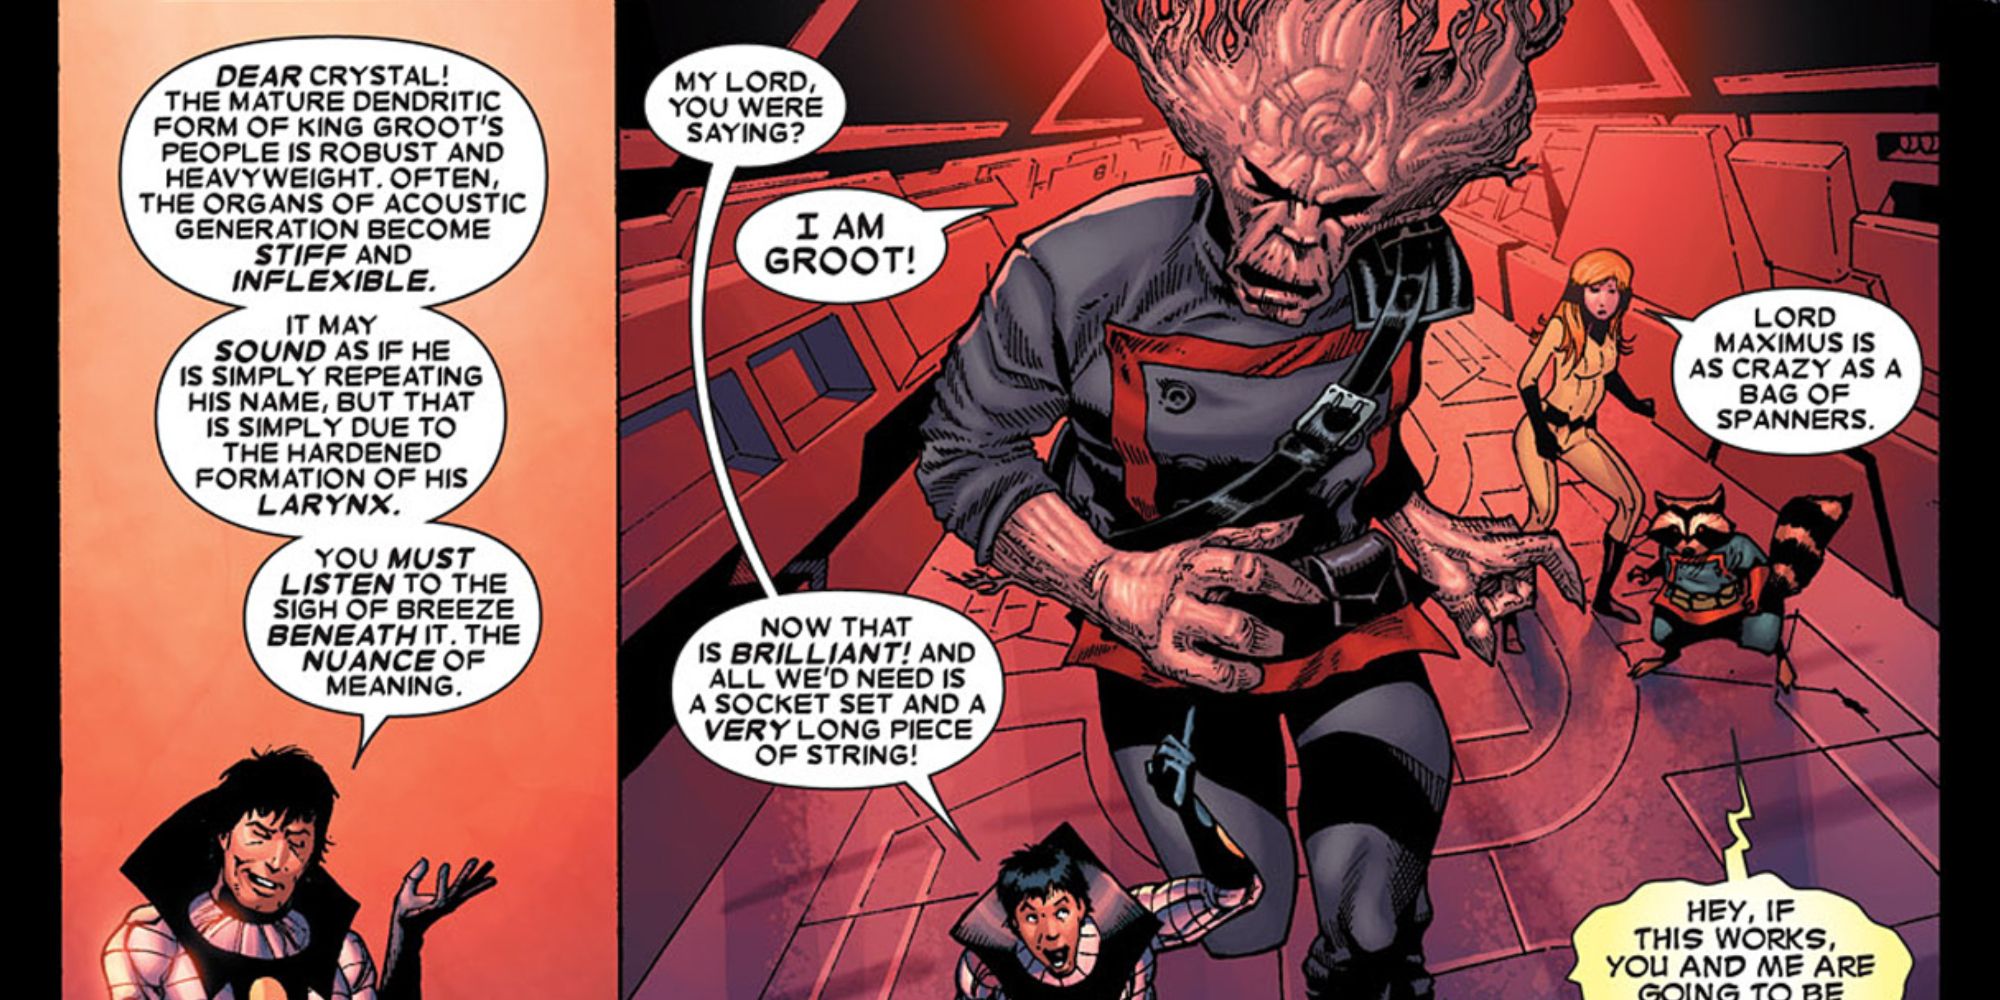 Lord Maximus traduz para Groot na Marvel Comics.